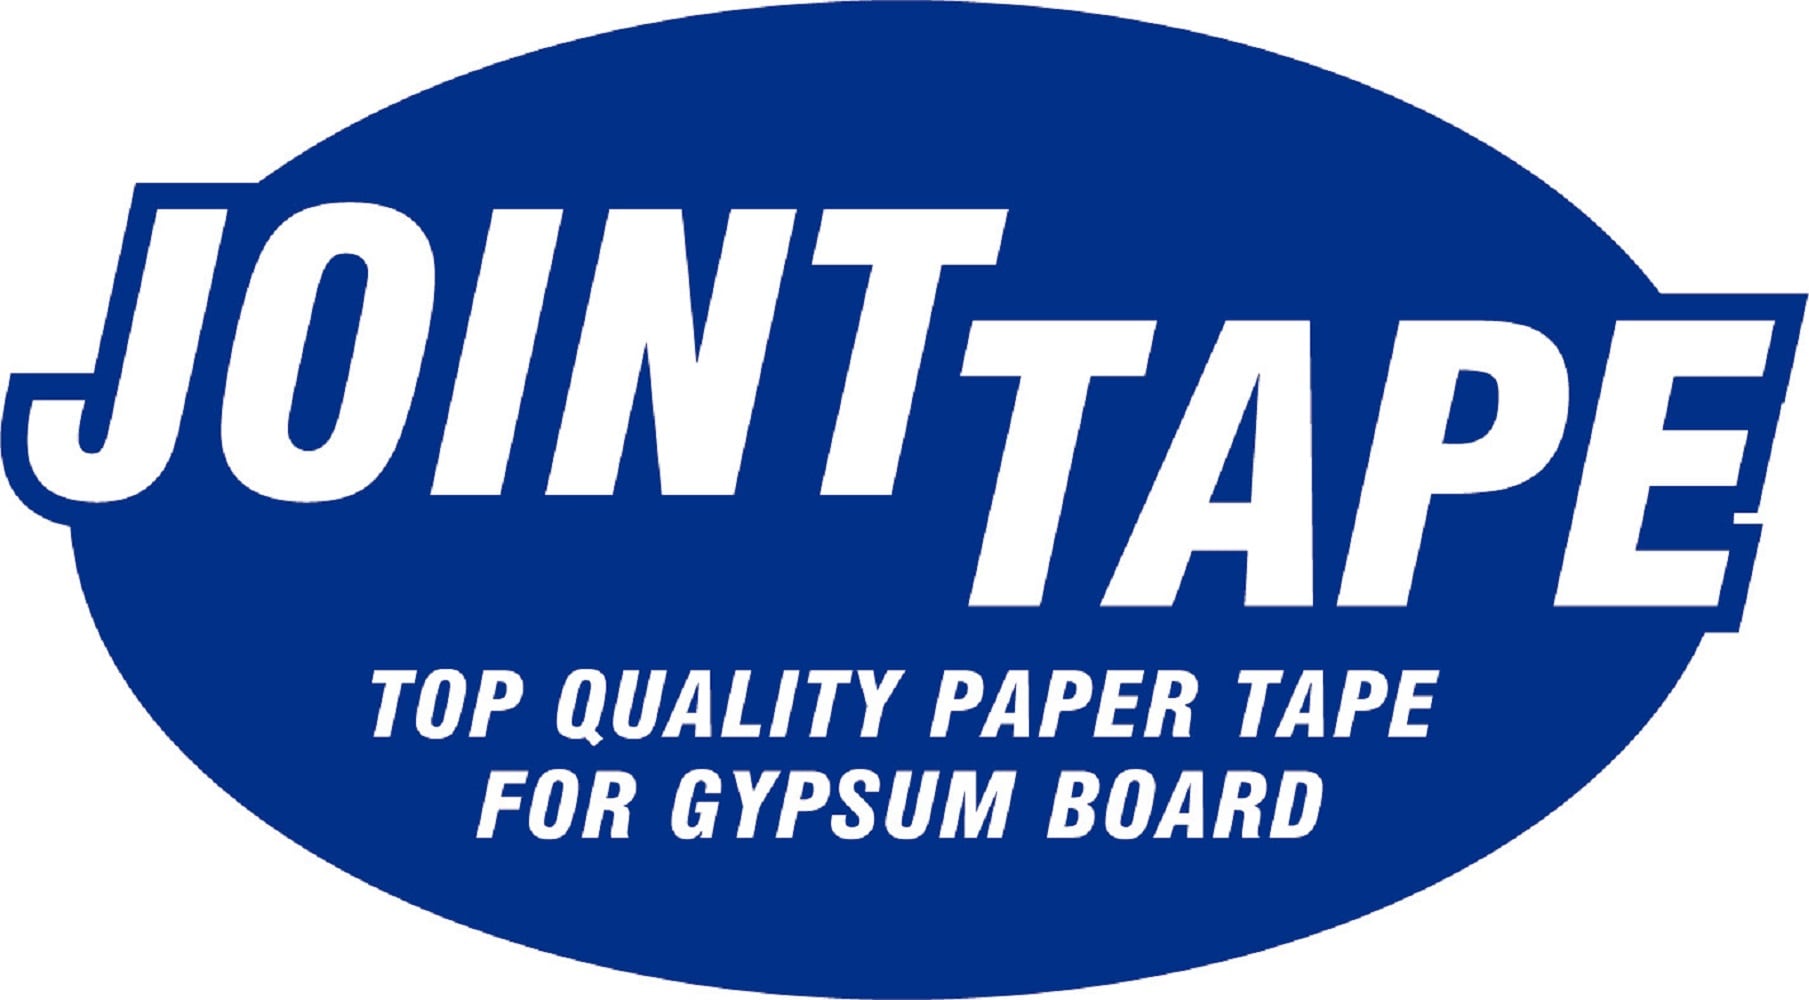 Saint Gobain FDW6619-U 2-inch x 500-foot Paper Joint Drywall Tape - Bed  Bath & Beyond - 12302851